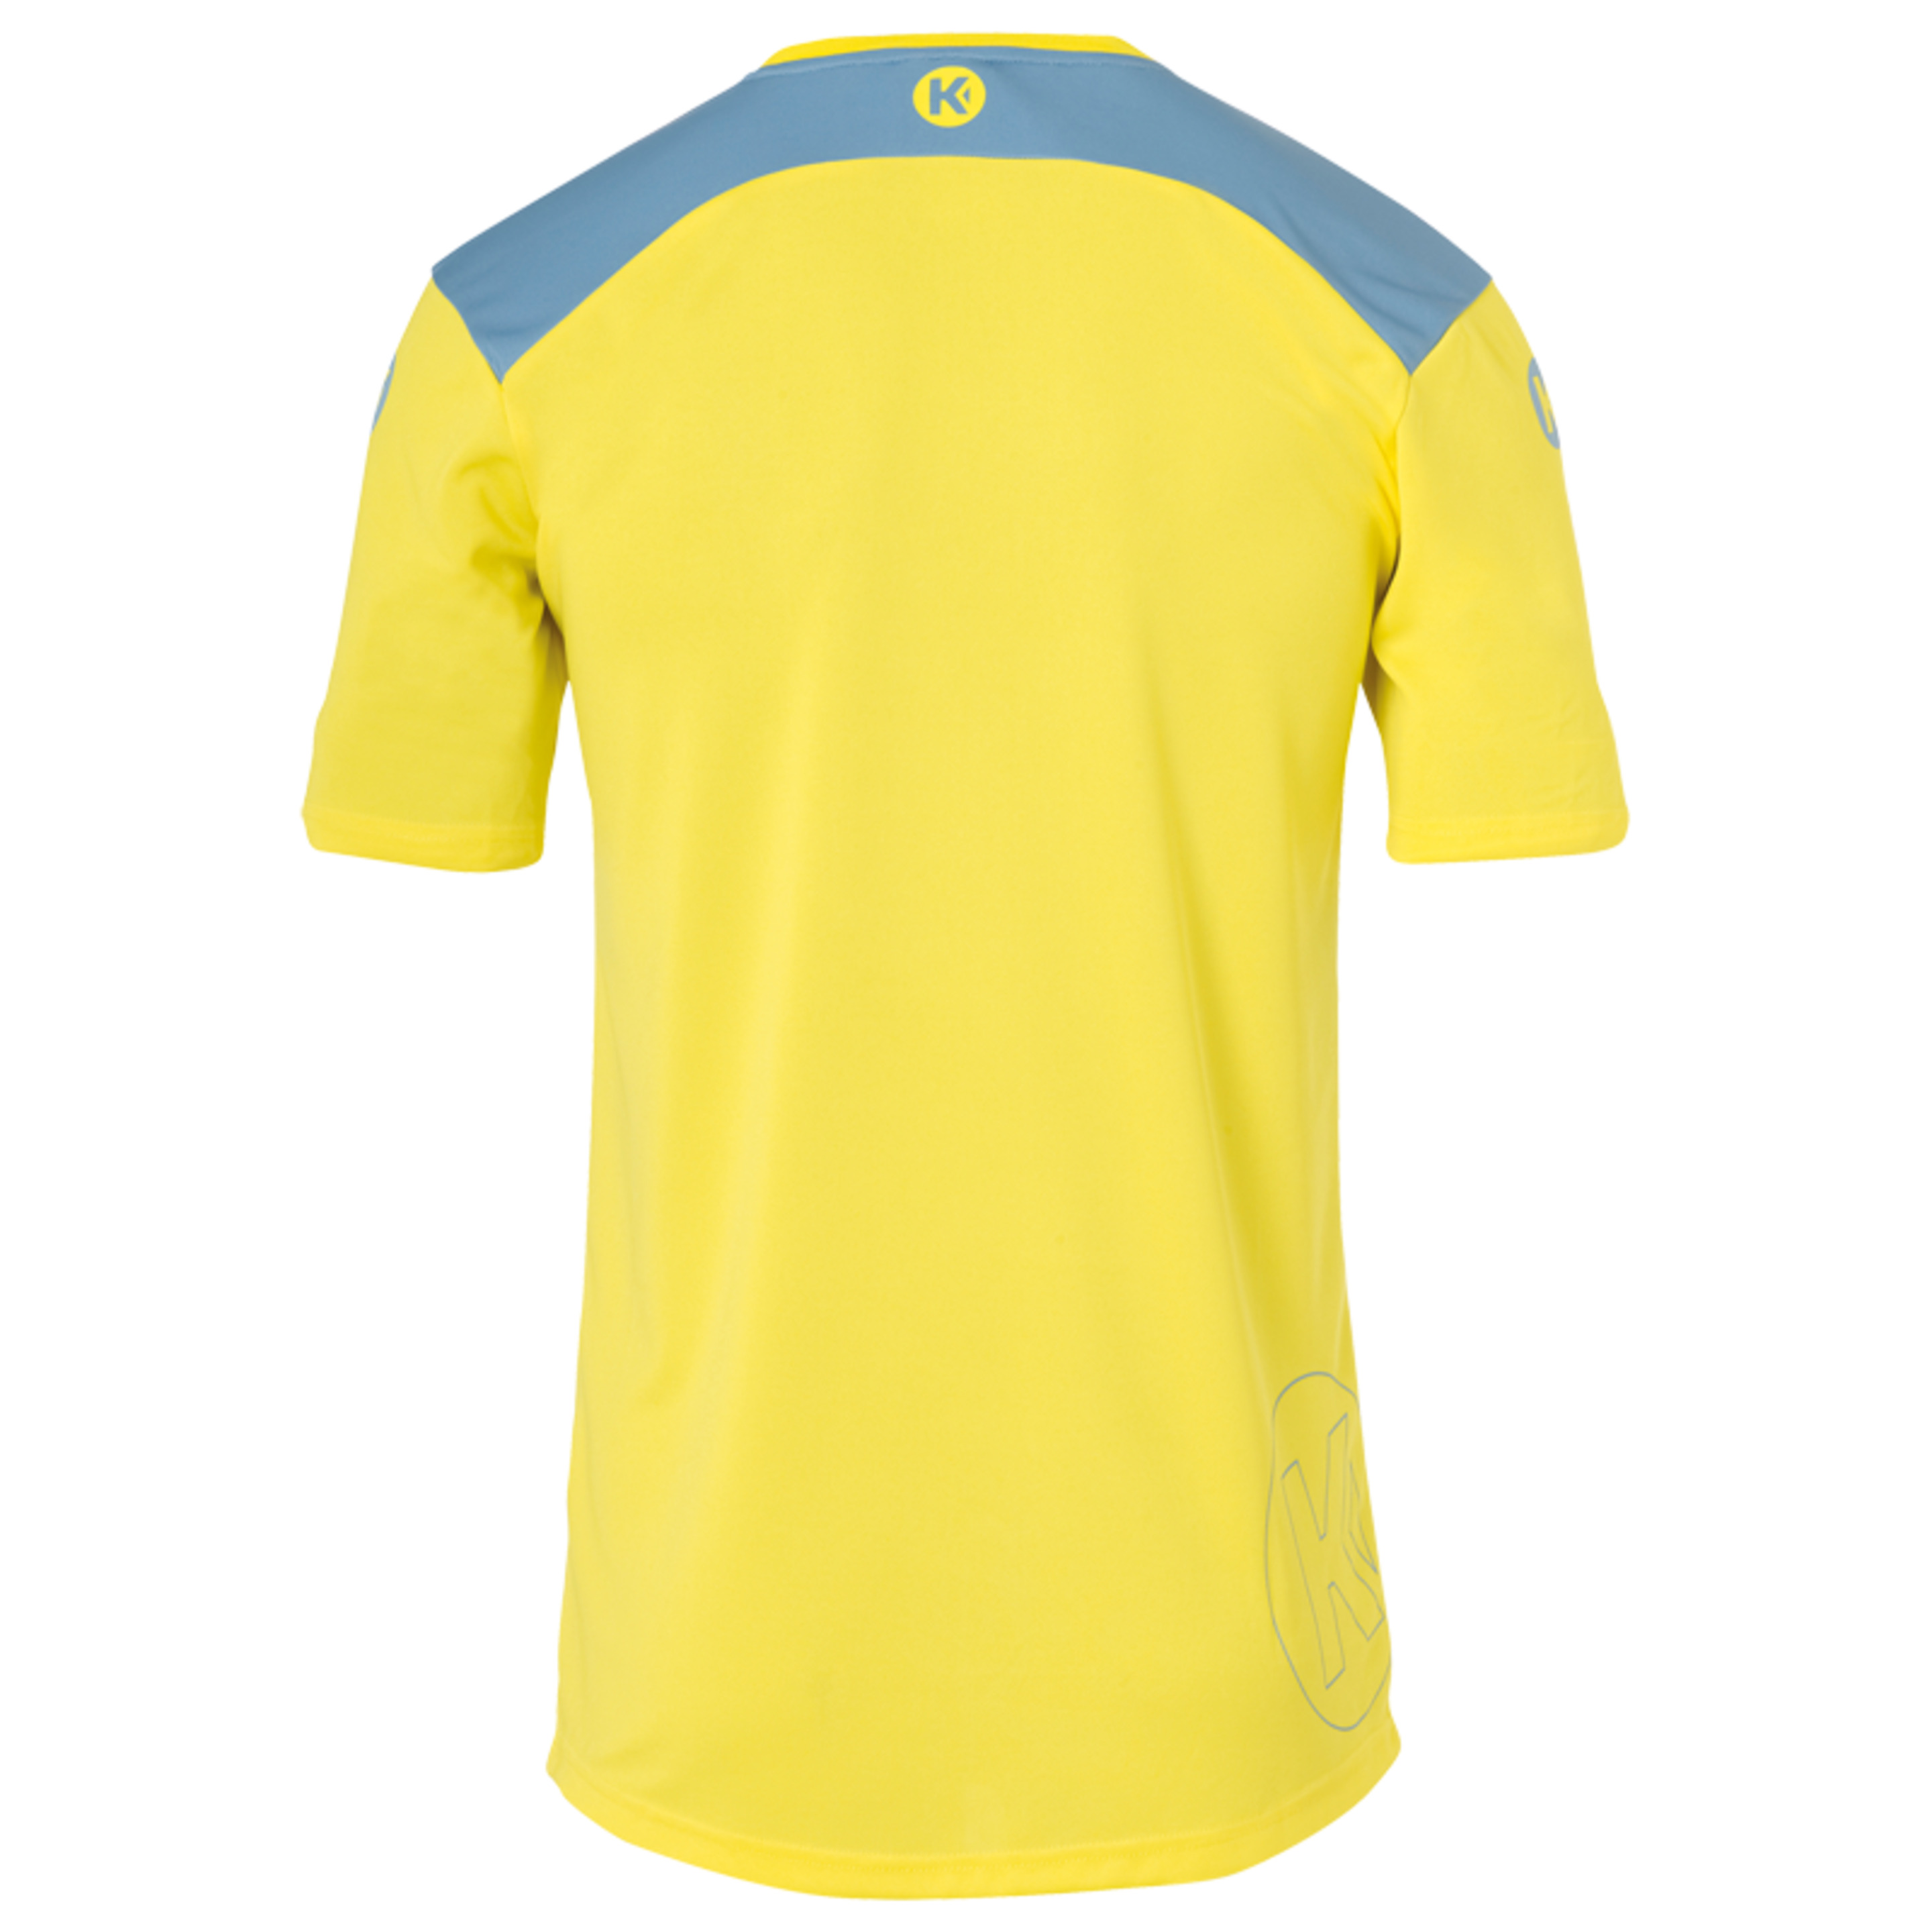 Emotion 2.0 Shirt Yellow Kempa - amarillo - Emotion 2.0 Shirt Yellow Kempa  MKP